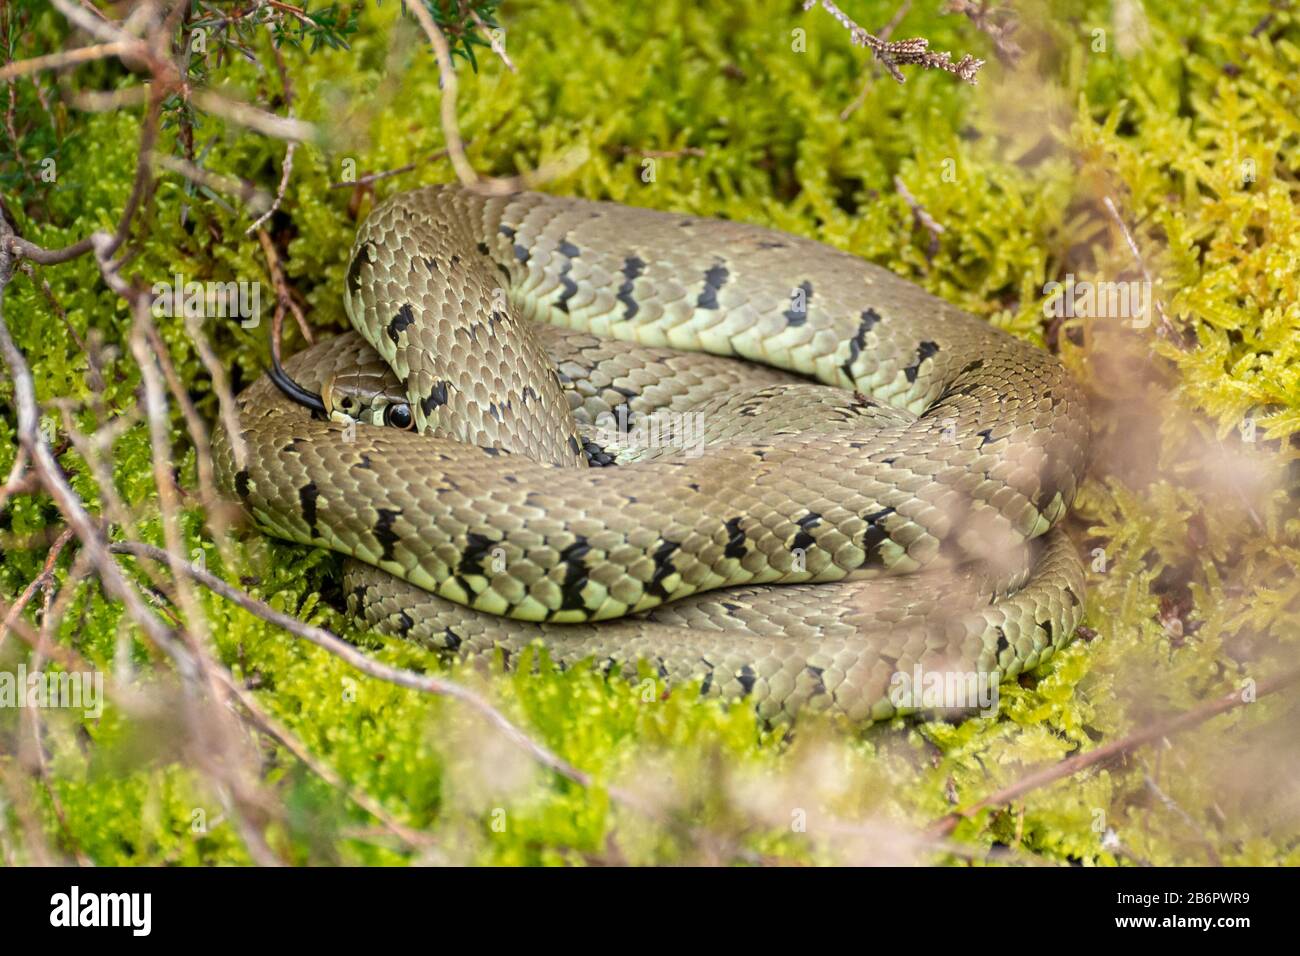 Barred grass snake (Natrix helvetica) basking on moss in heathland habitat, Hampshire, UK, during March Stock Photo